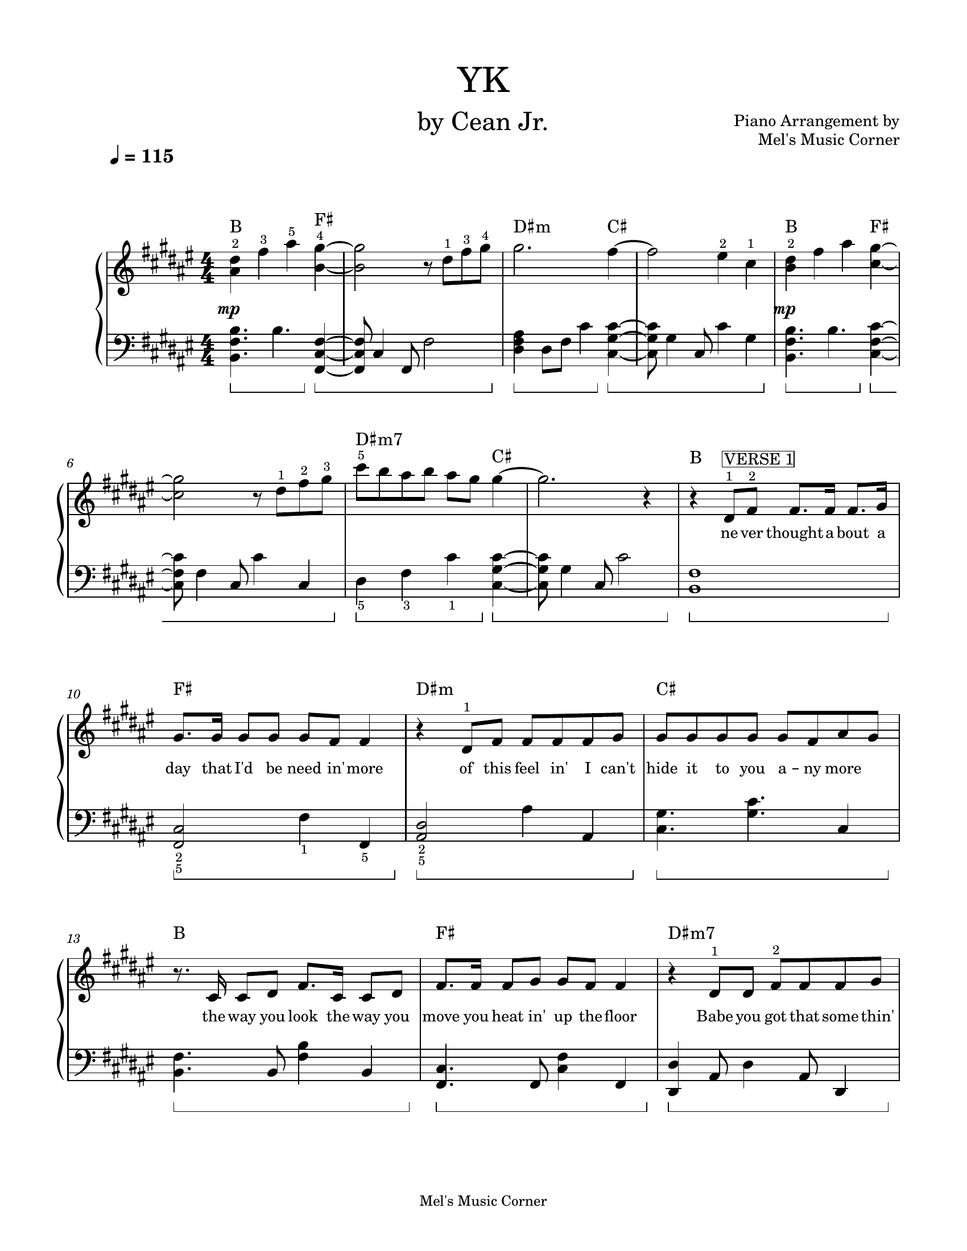 Cean Jr. - YK (piano sheet music) by Mel's Music Corner